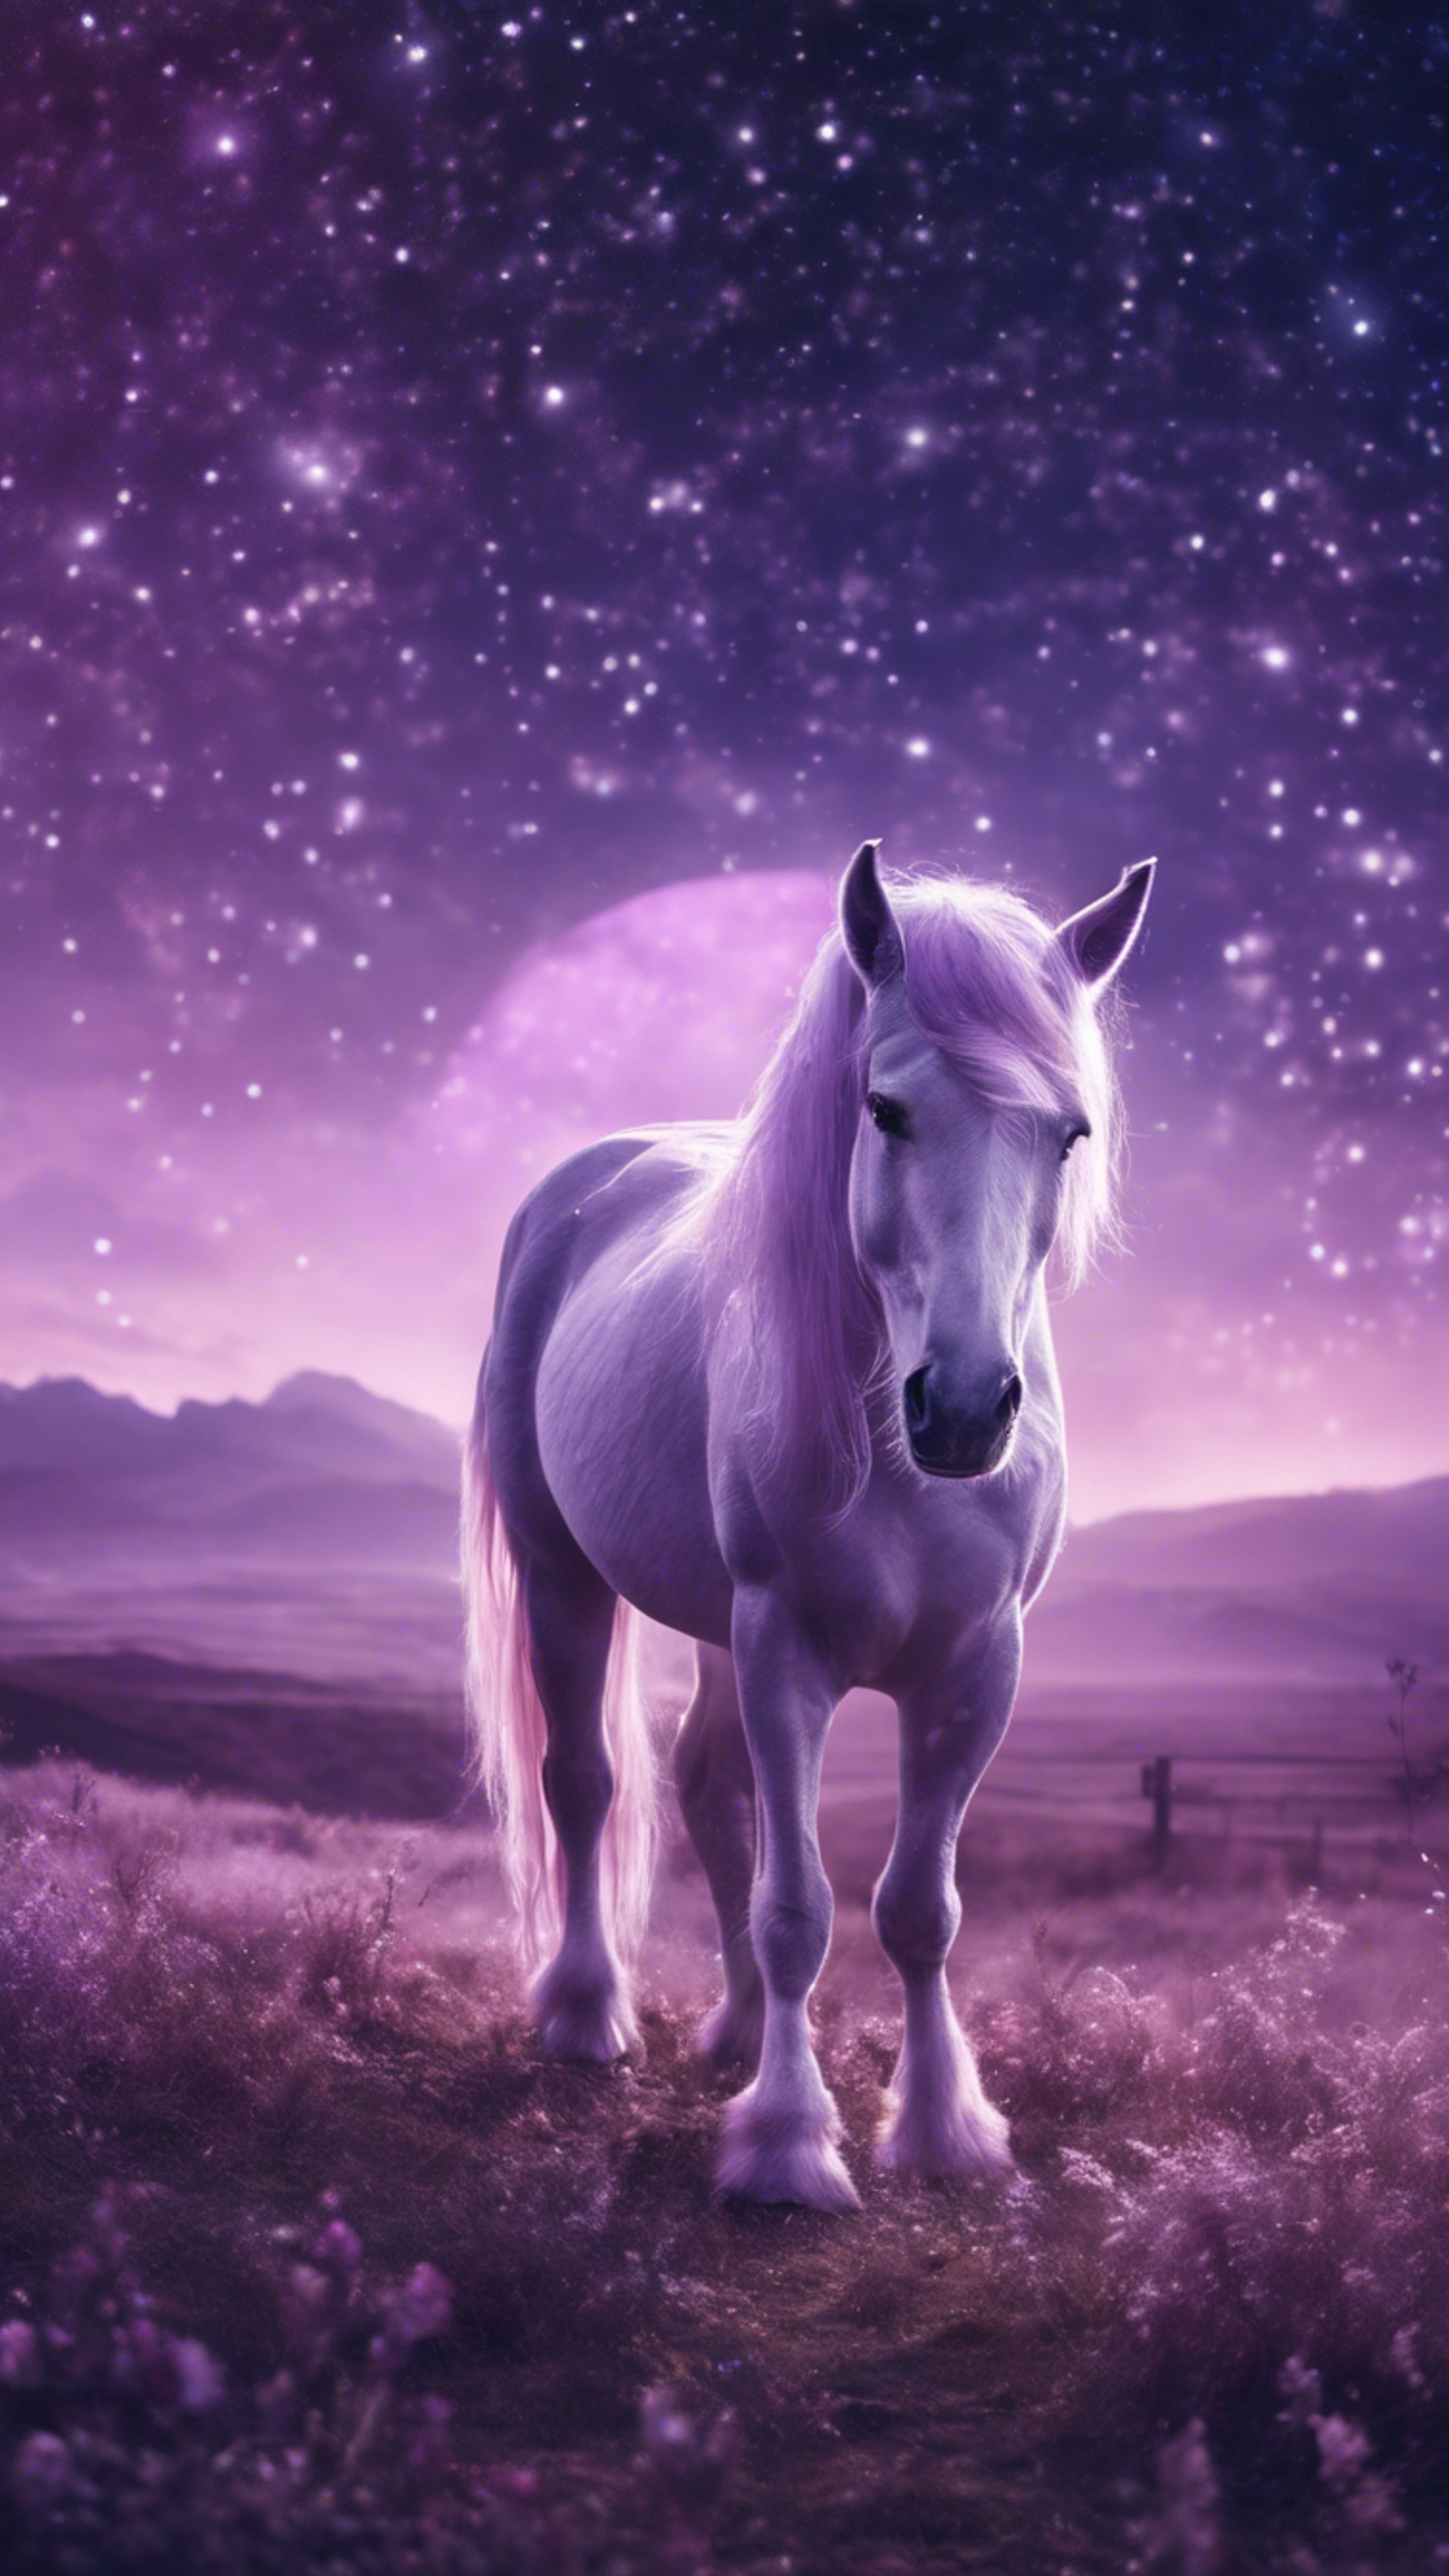 A light purple unicorn grazing in a mystical landscape under the starry night. Behang[ebdebf087ad14a189ba8]